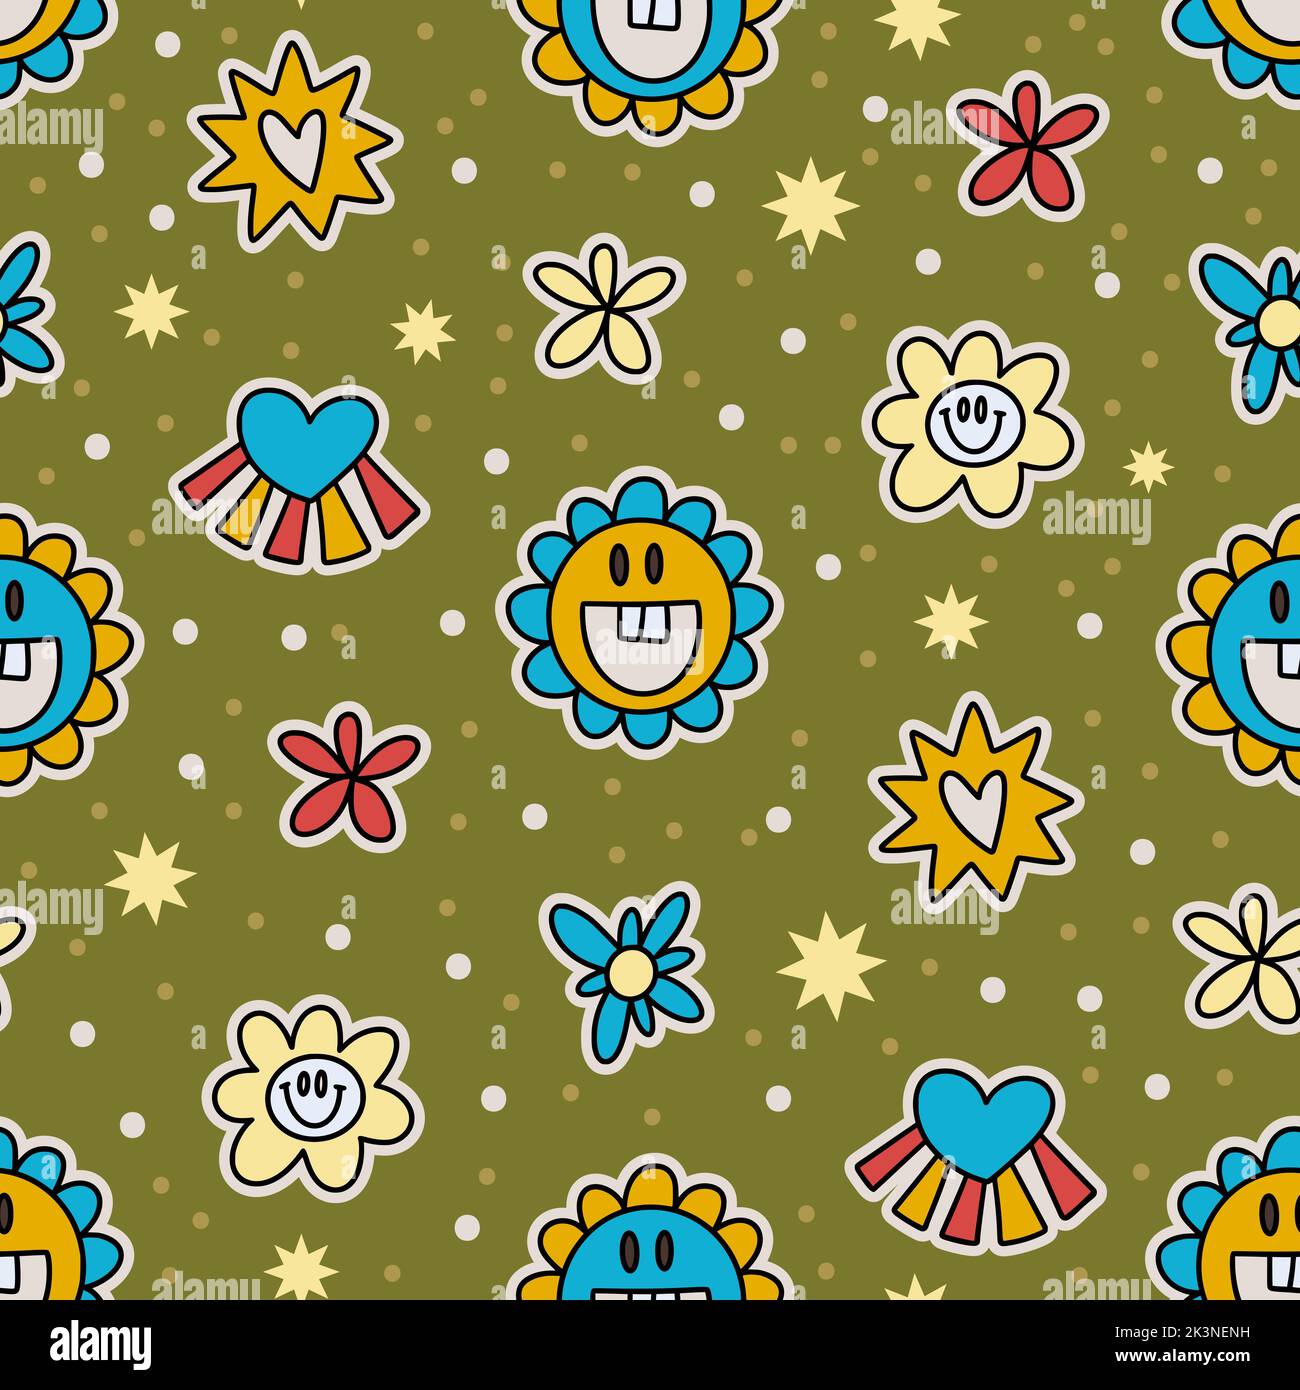 Cute cartoon groovy sticker flower vector seamless pattern. Hippie retro background illustration Stock Vector